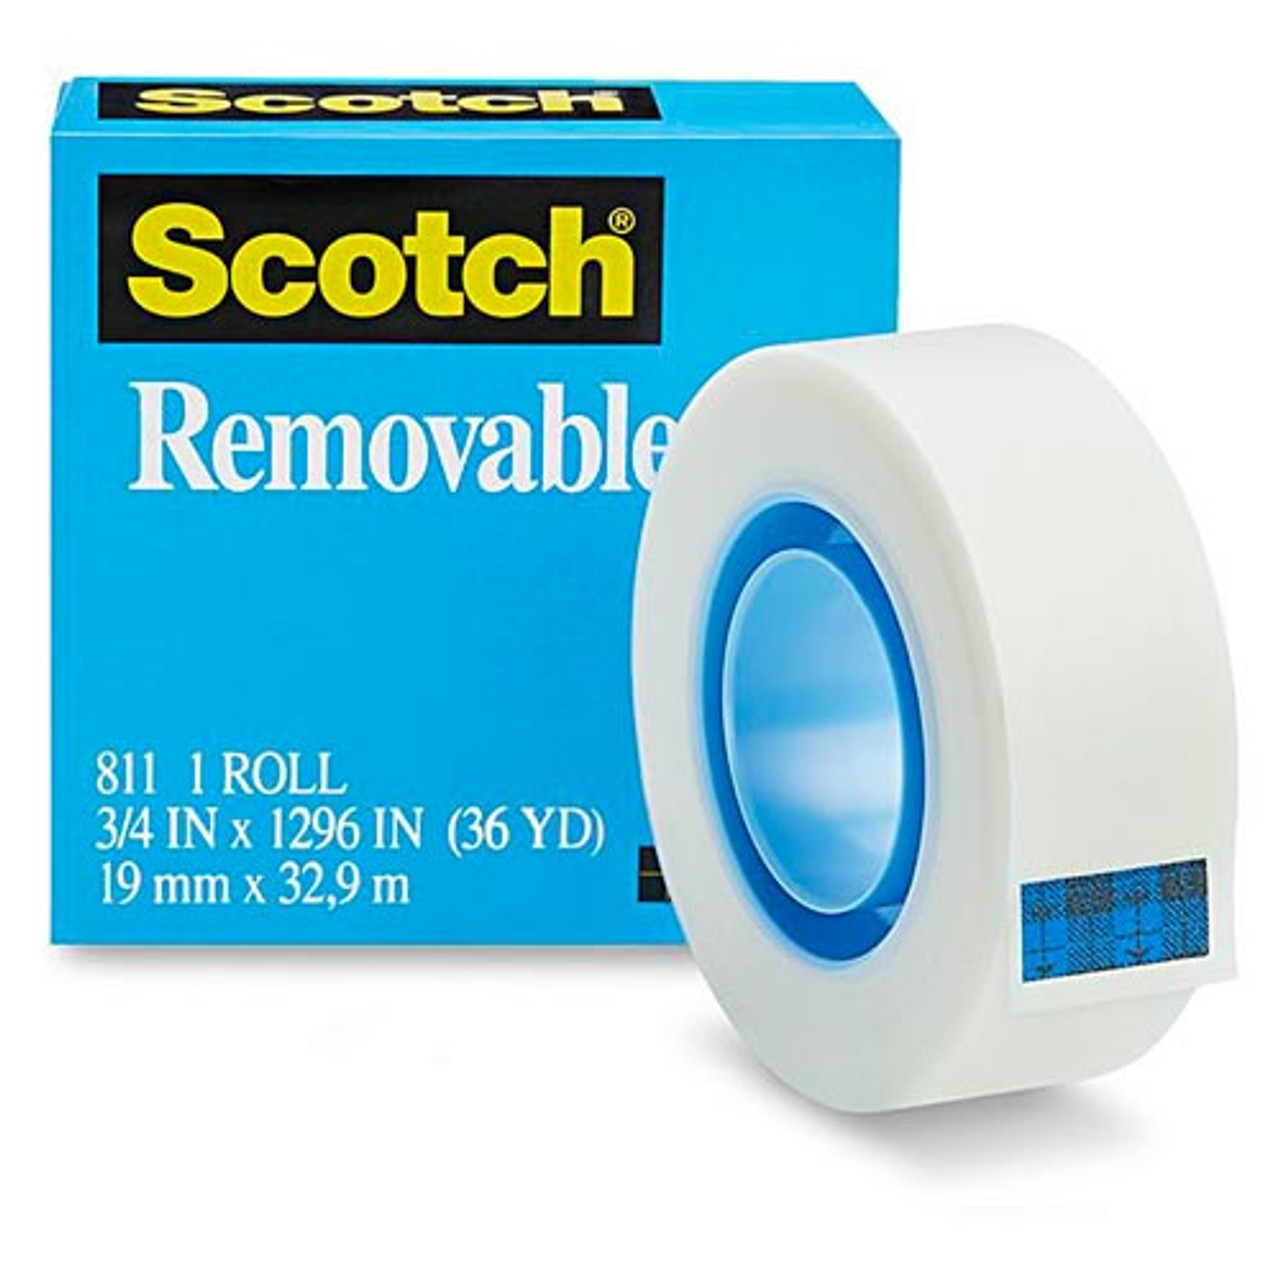 ScotchBlue™ Tape Applicator Refills 2093EL-RF, 1 refill/pack, 12 packs/case